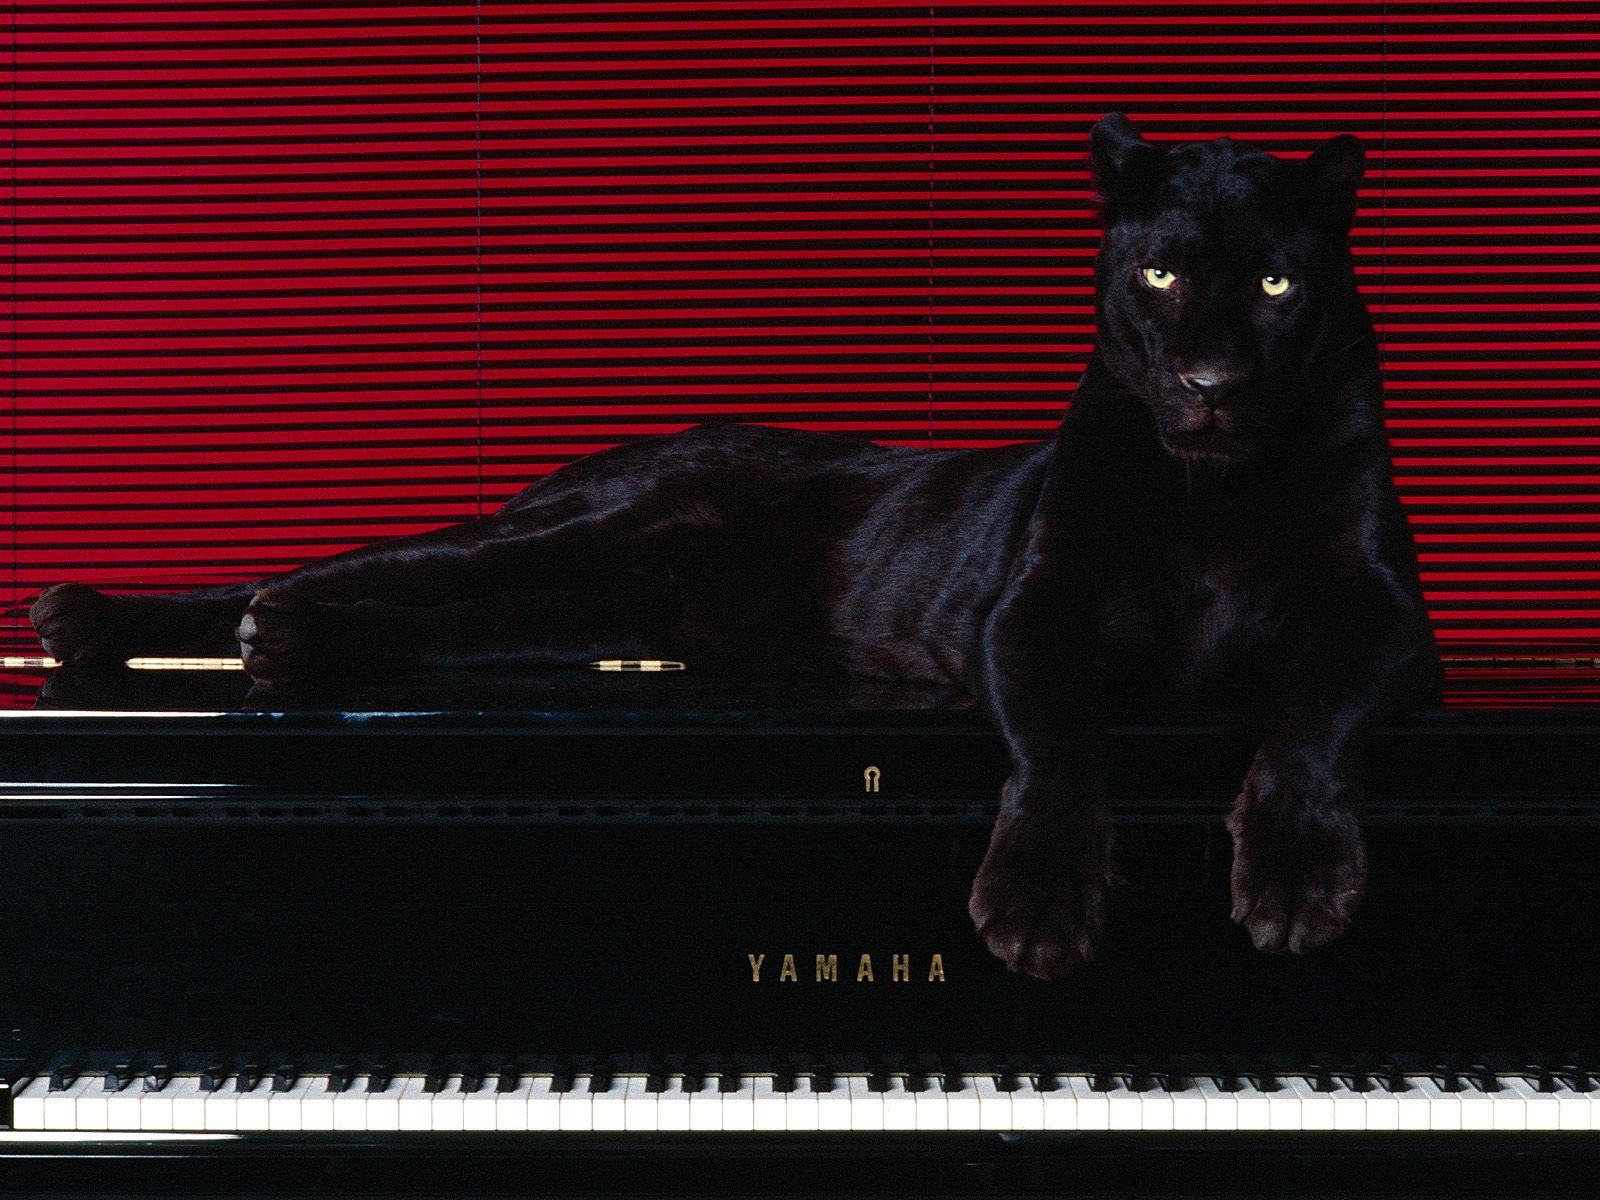 http://4.bp.blogspot.com/-e6hGmwJzILs/T-yg6DheztI/AAAAAAAAAUM/2wYYvOxGDV8/s1600/Black+Panther+on+Piano.jpg